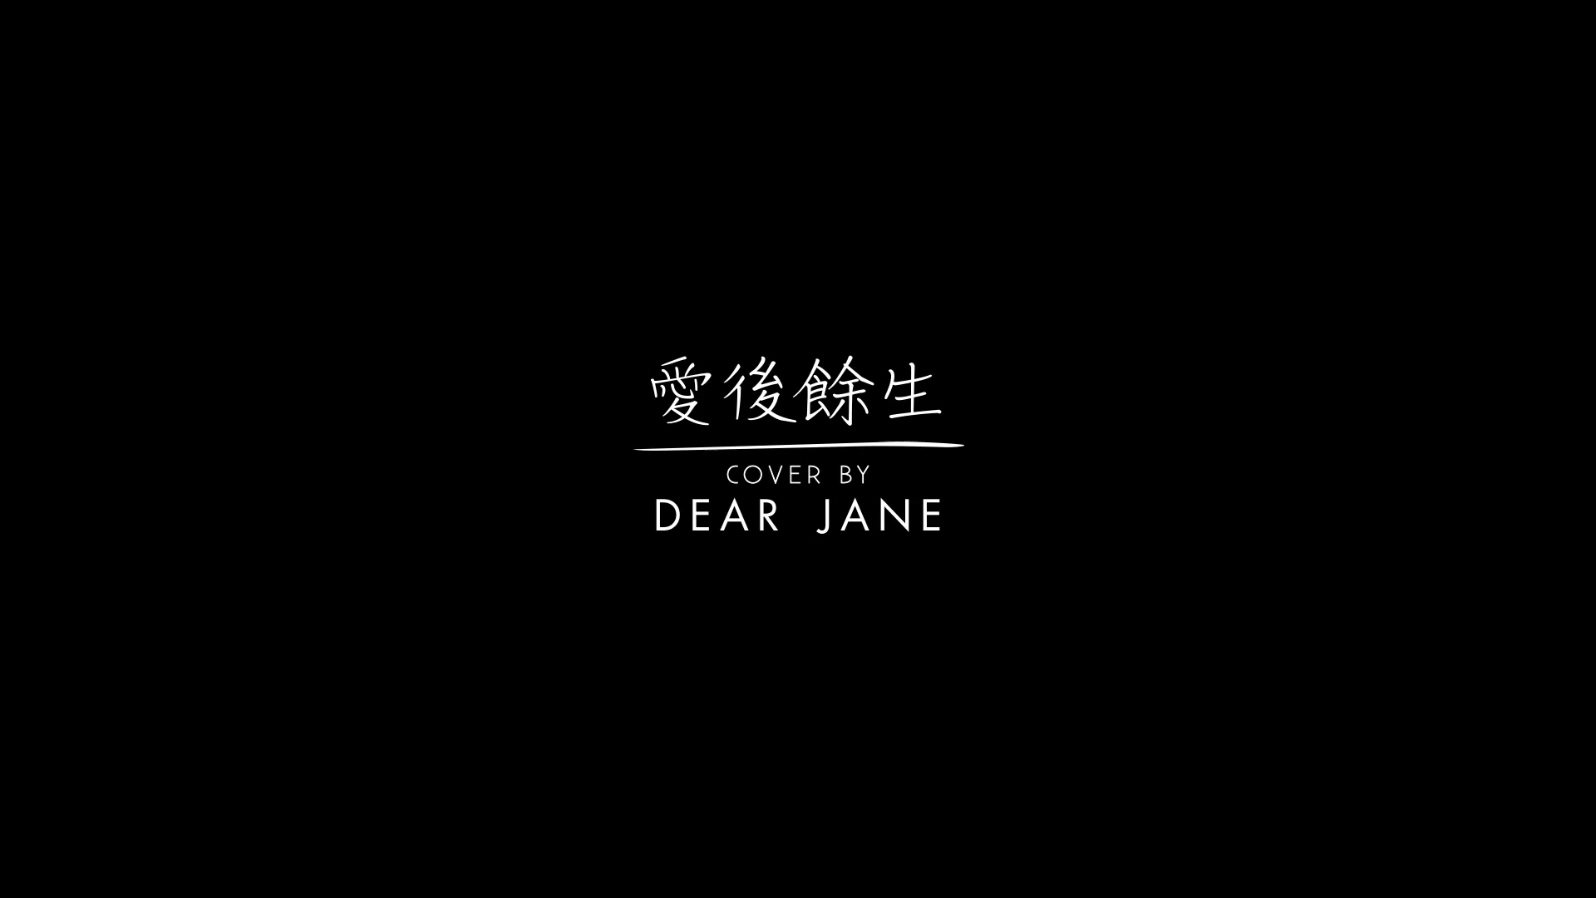 Dear Jane Studio Live - 爱後余生 谢霆锋原唱 - 1080P